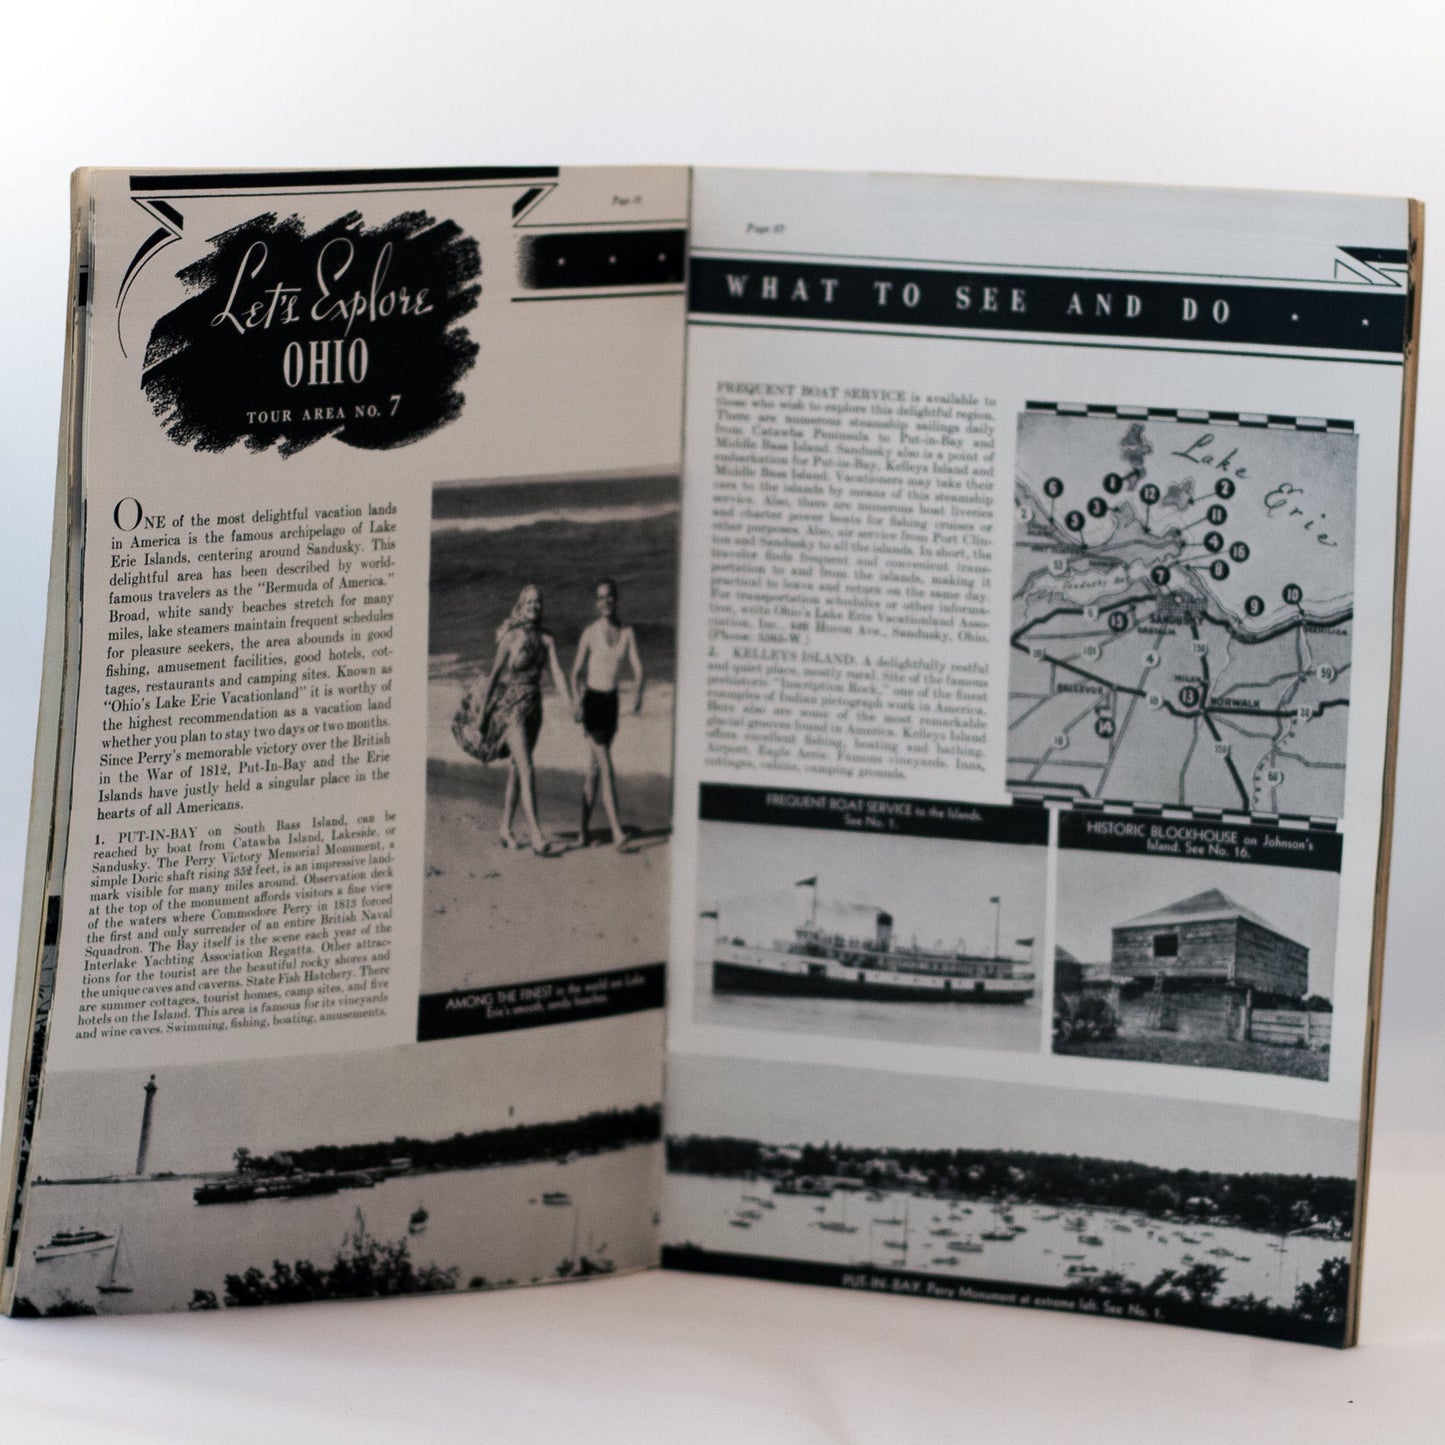 LET'S EXPLORE OHIO Travel Publication by The Standard Ohio Company Circa 1941